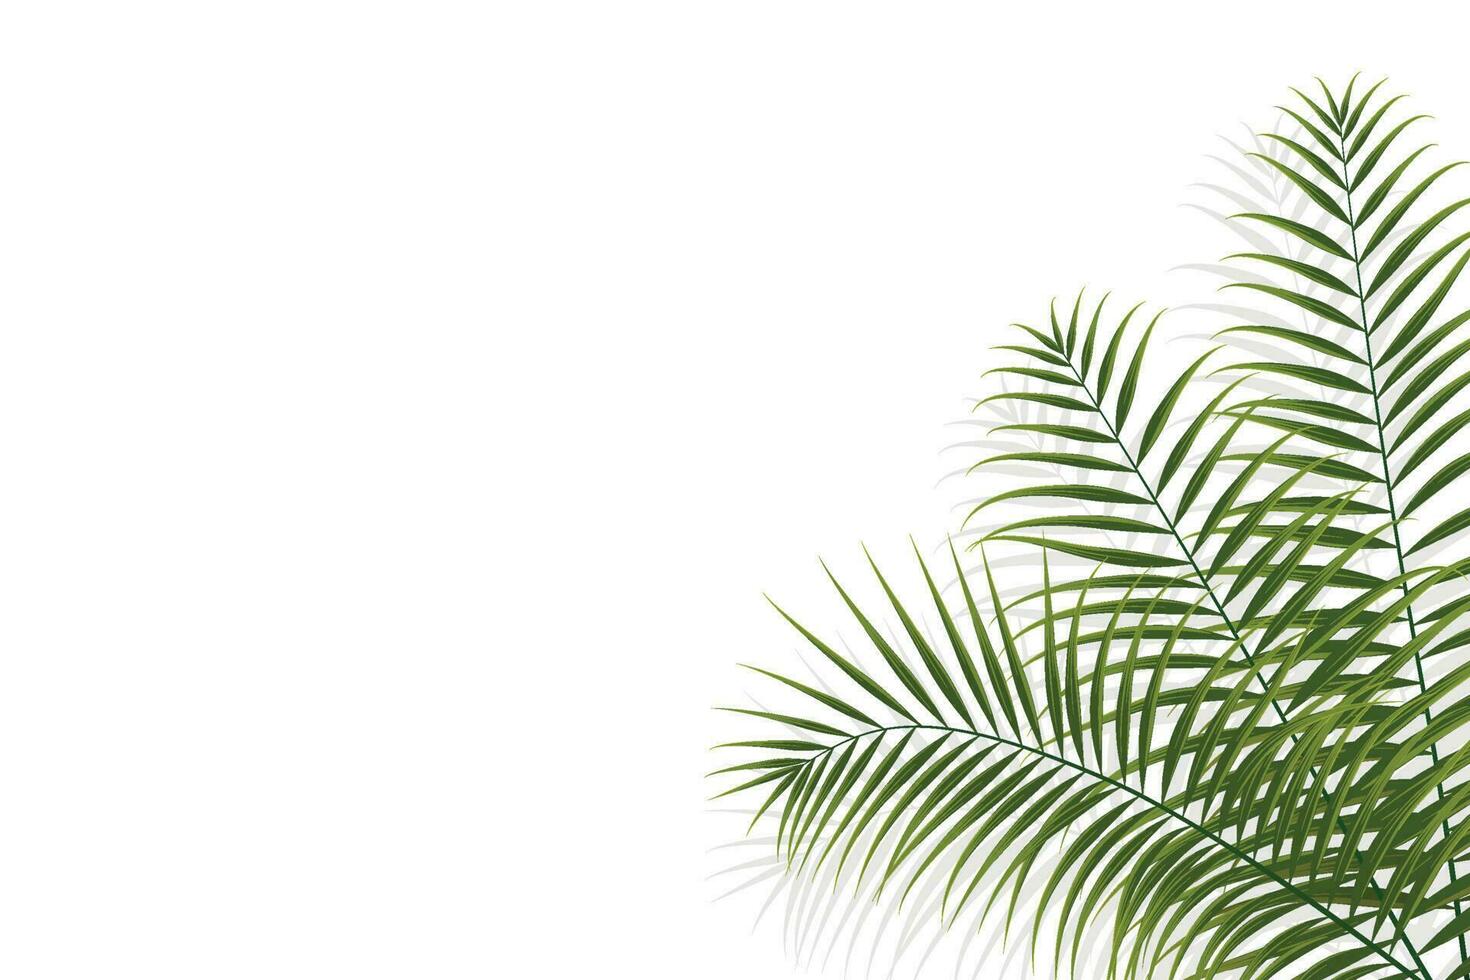 palmzweig, kokosblatt, tropische pflanze vektor